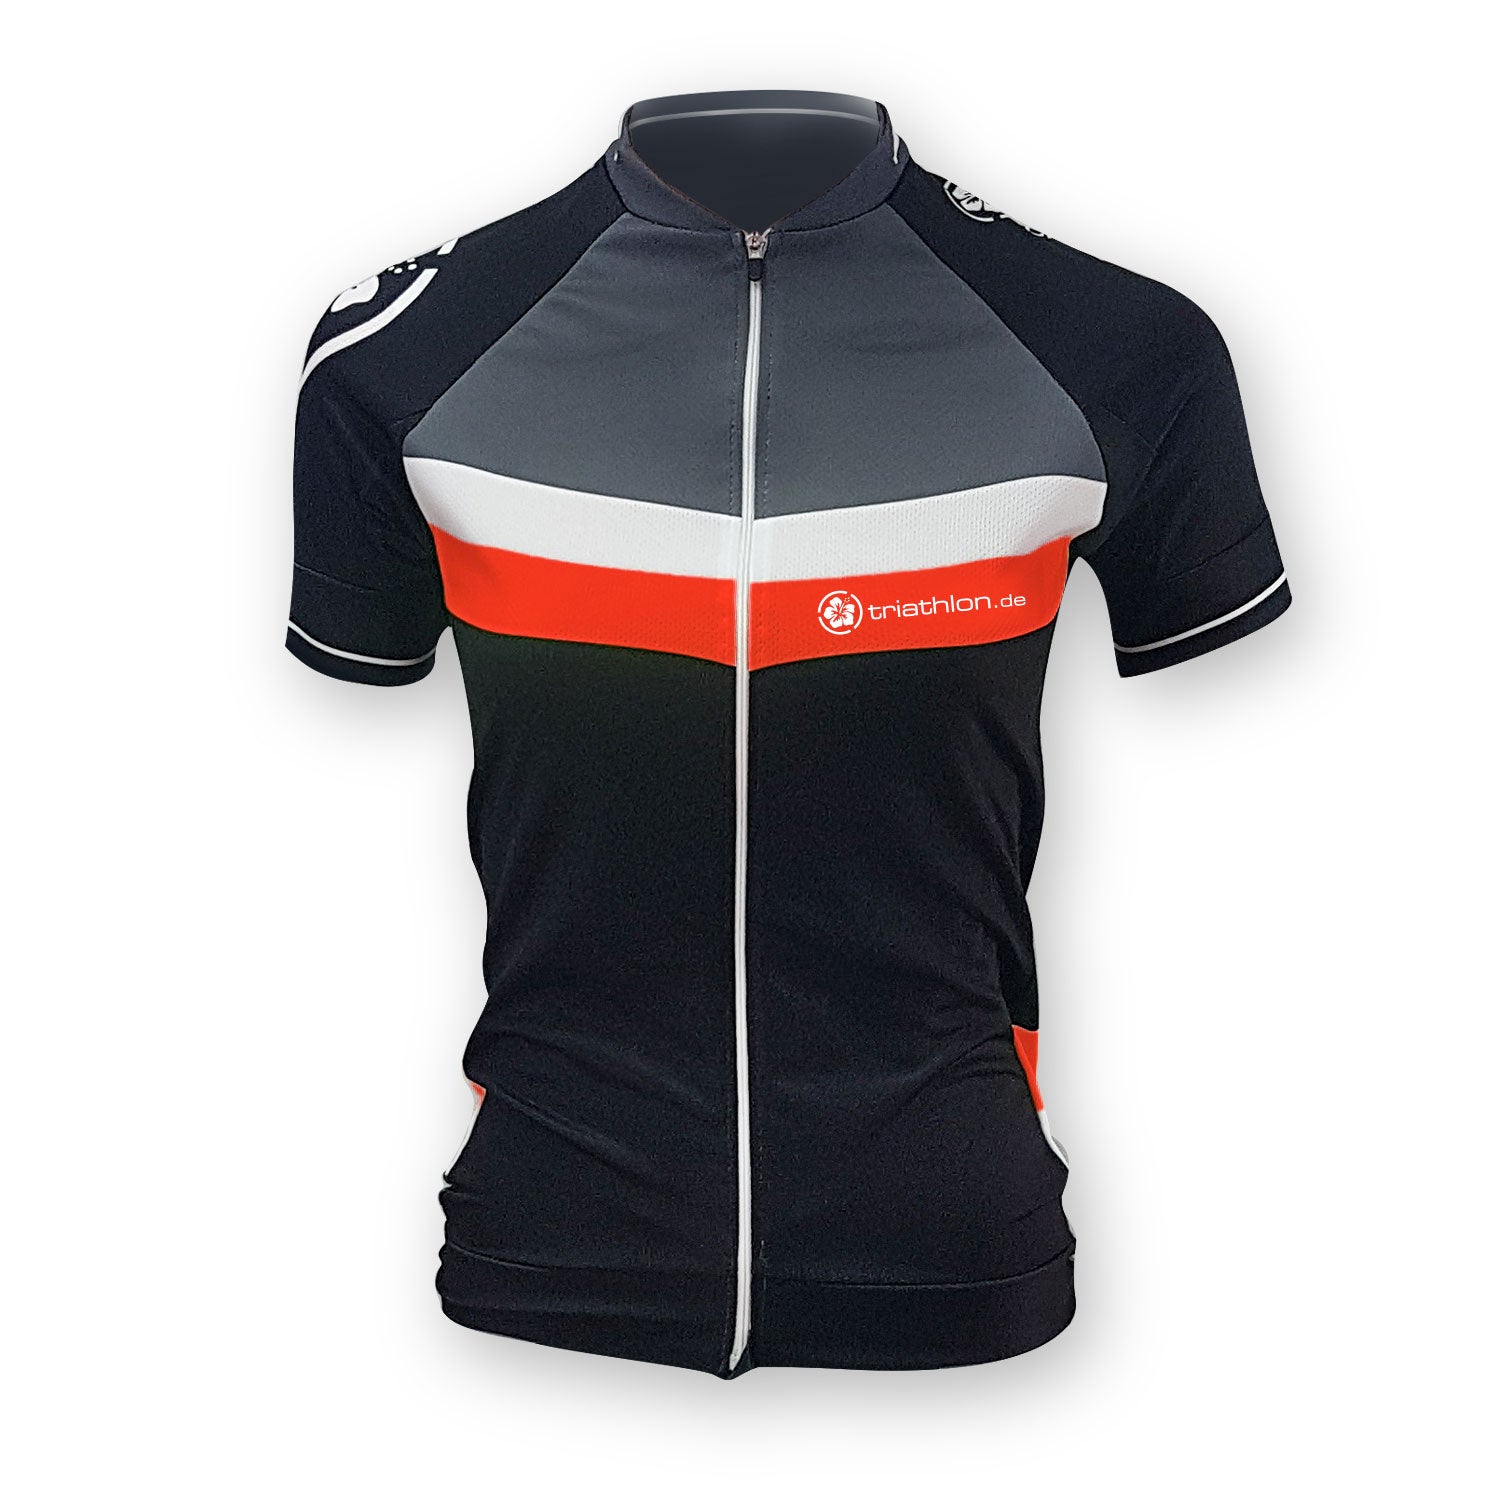 triathlon.de elite cycling jersey, women, black/grey/red